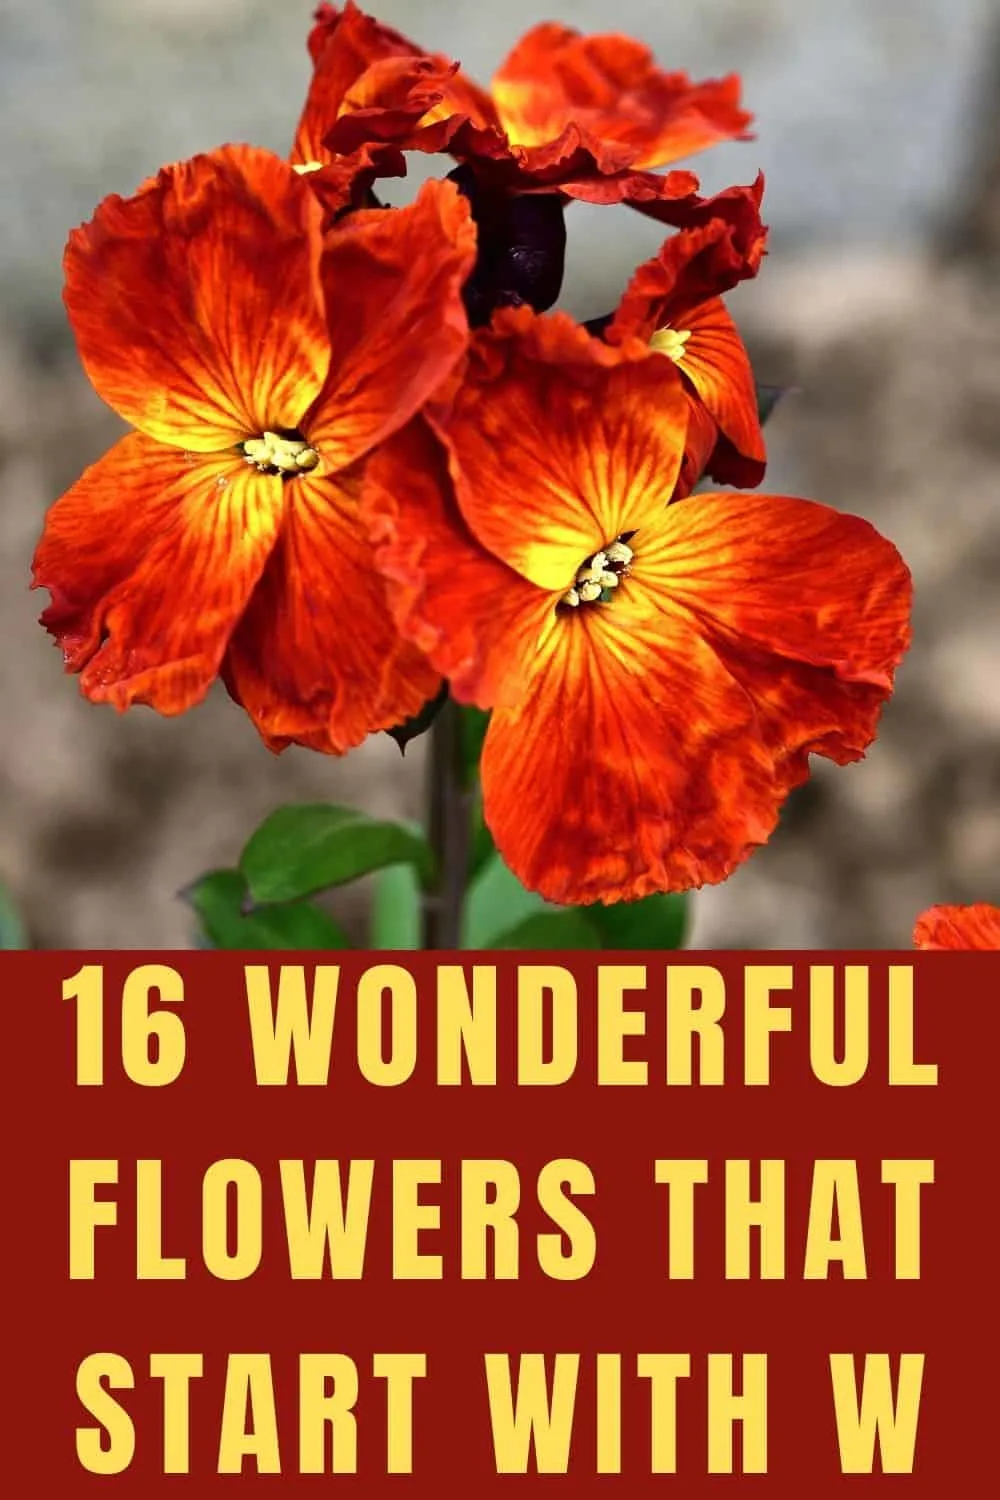 16 wonderful flowers that start with w